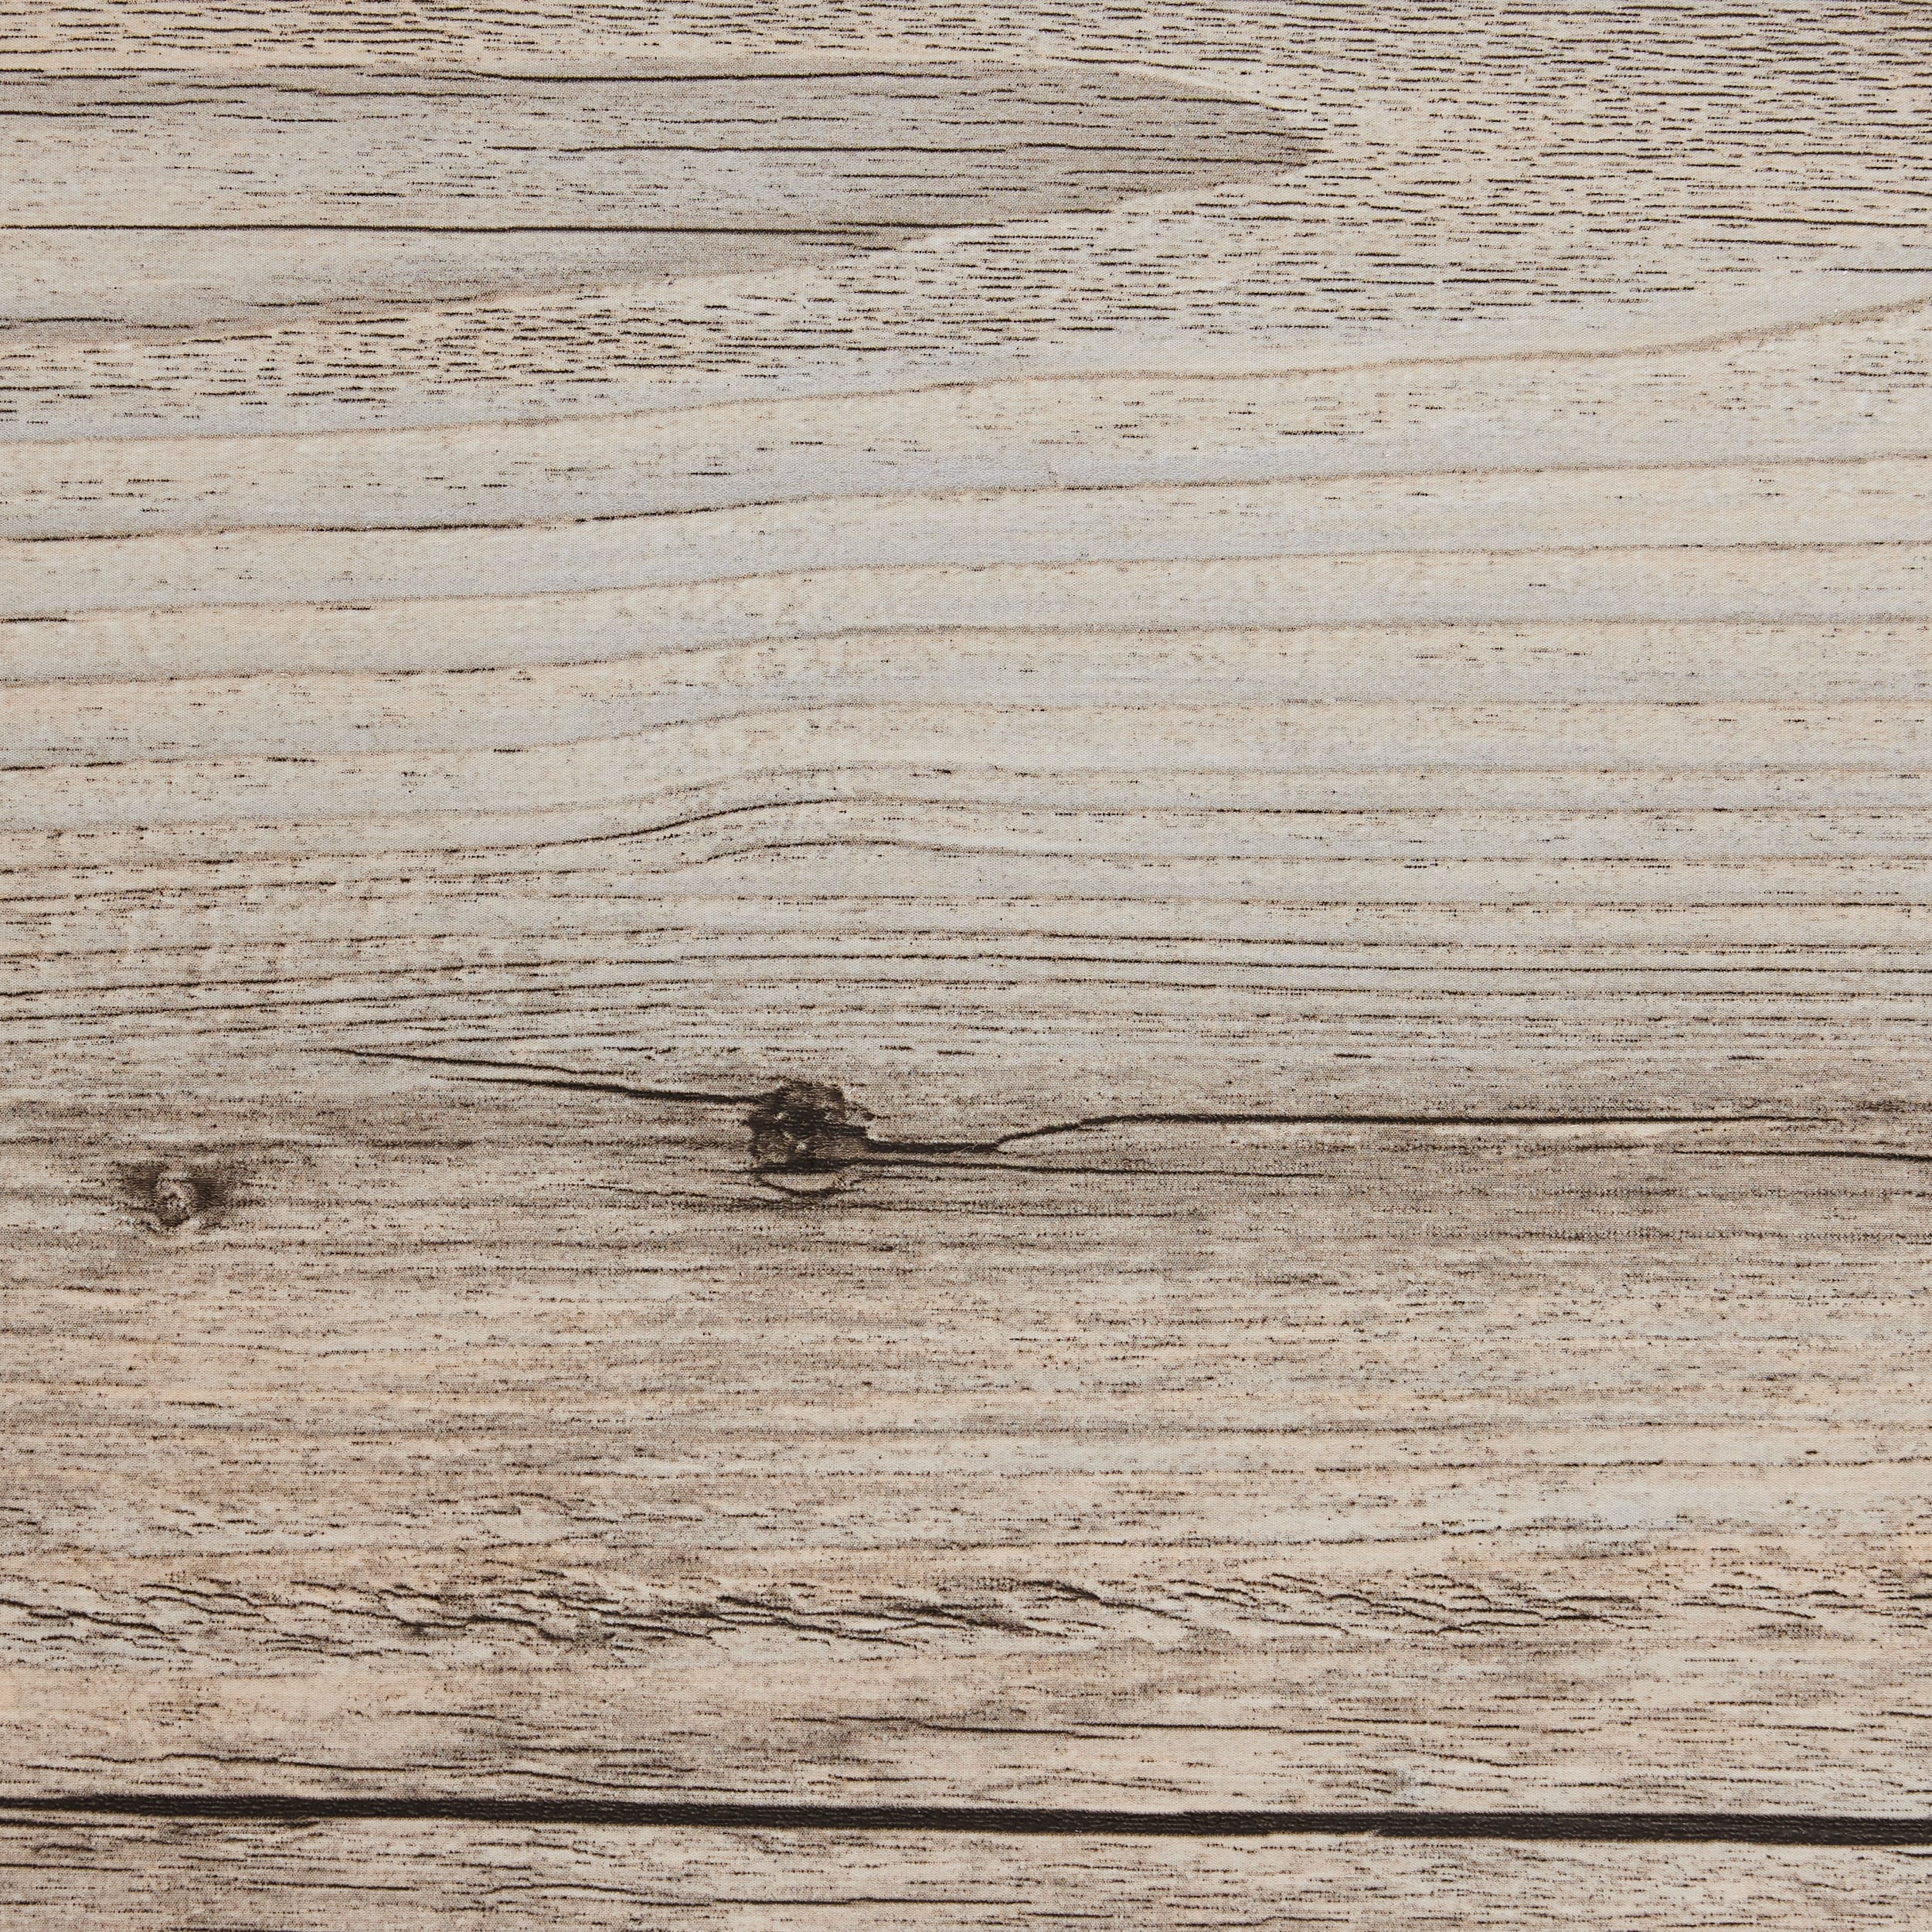 Livelynine 6X36 Grey Wood Vinyl Flooring Waterproof Wood Planks Peel and  Stick Floor Tile Wood Look Vinyl Plank Flooring Grey Laminate Flooring  Tiles for Bathroom Kitchen Floors Sticky Sheet 4-Tiles 